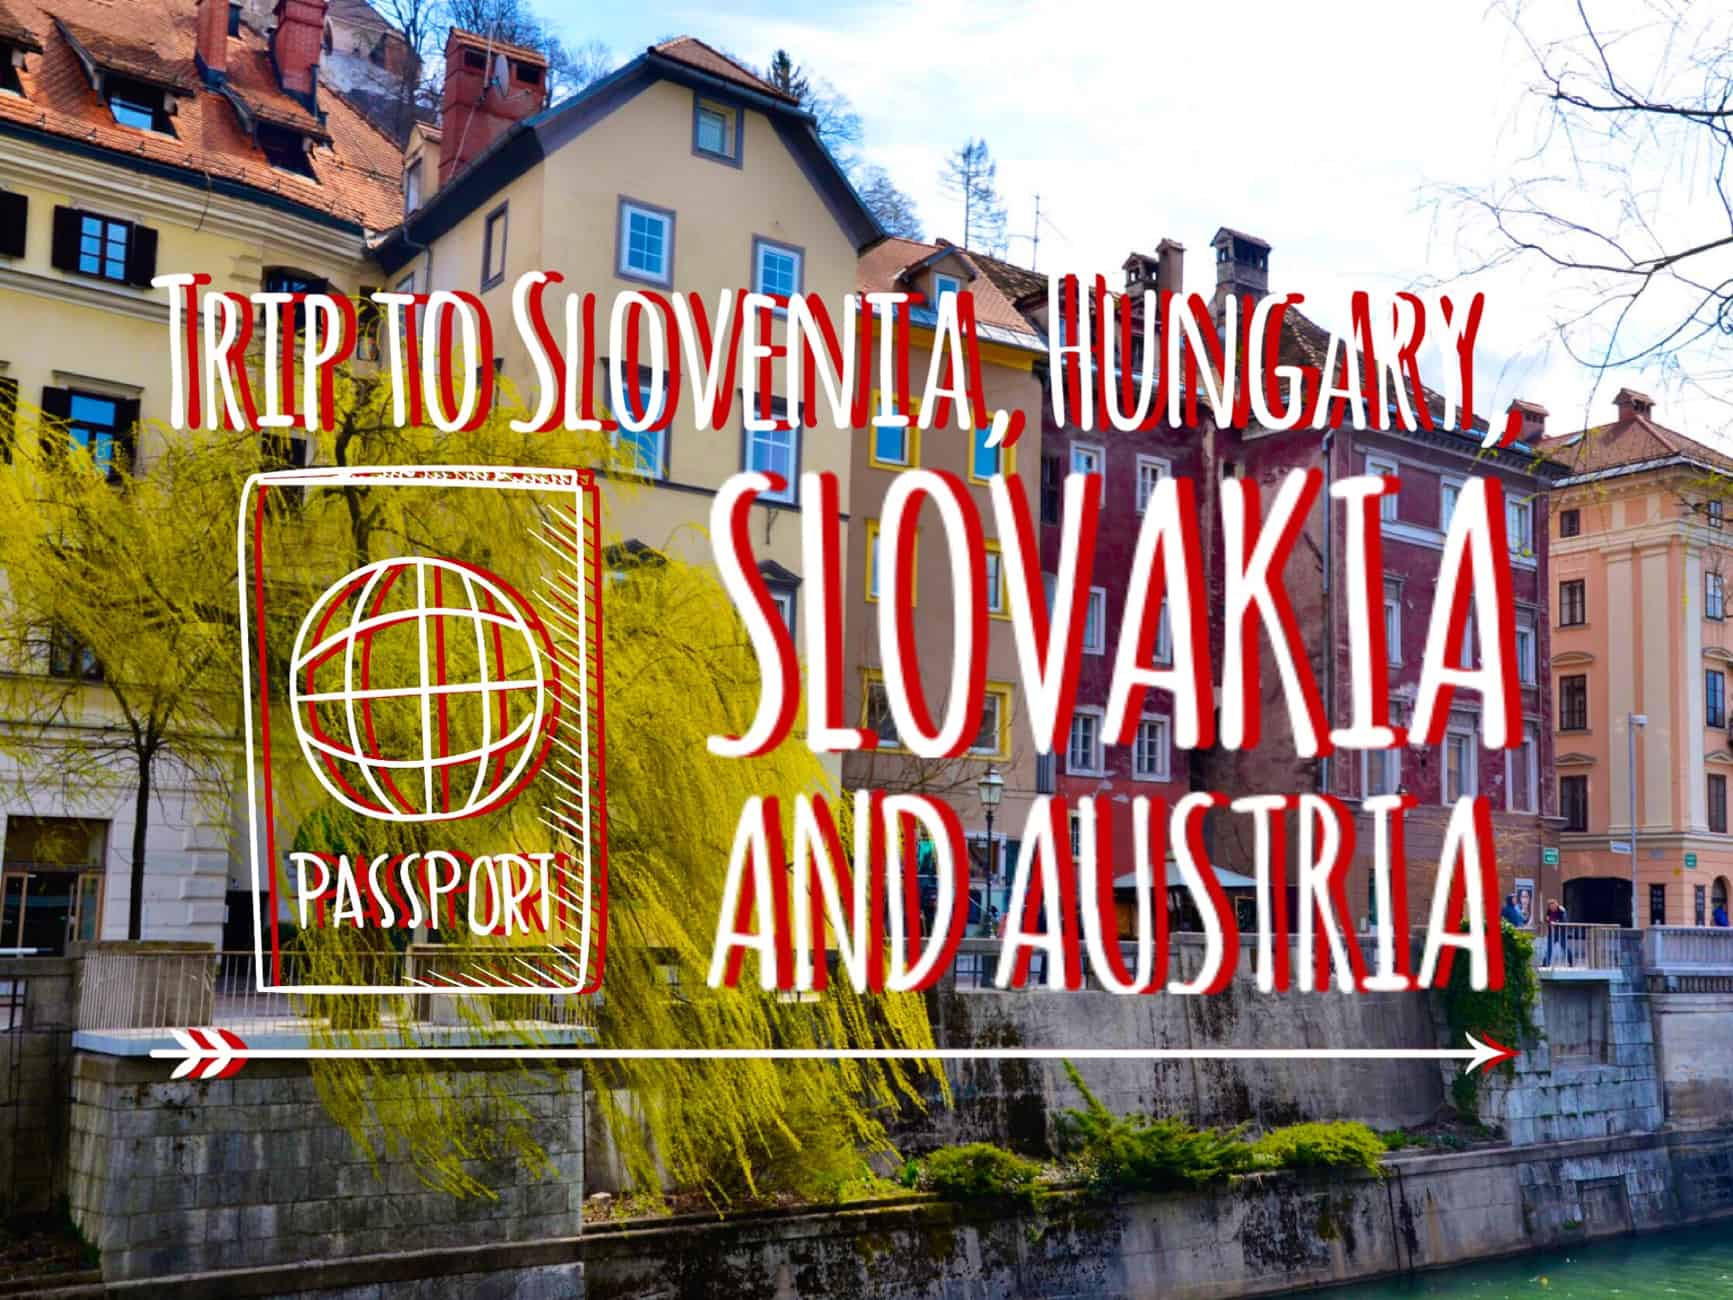 Slovenia, Hungary, Slovakia and Austria